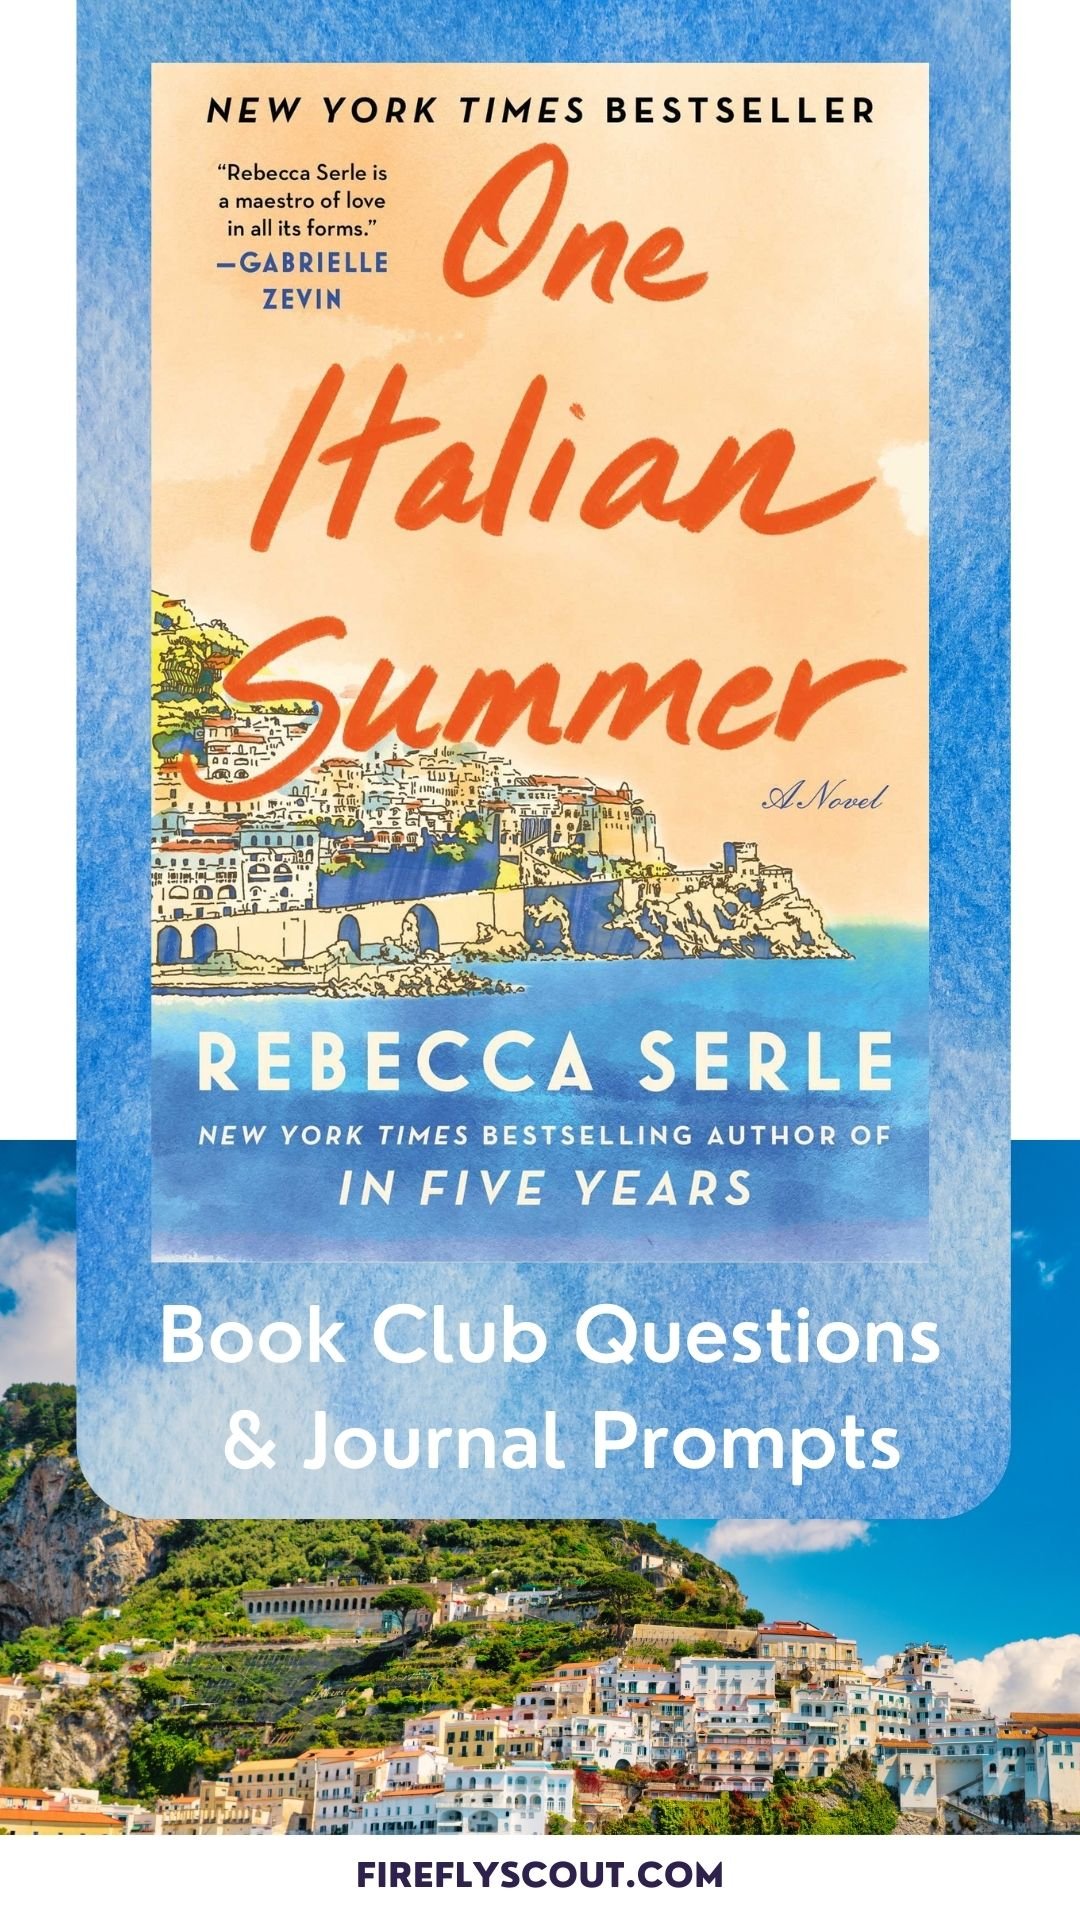 One Italian Summer Book Club